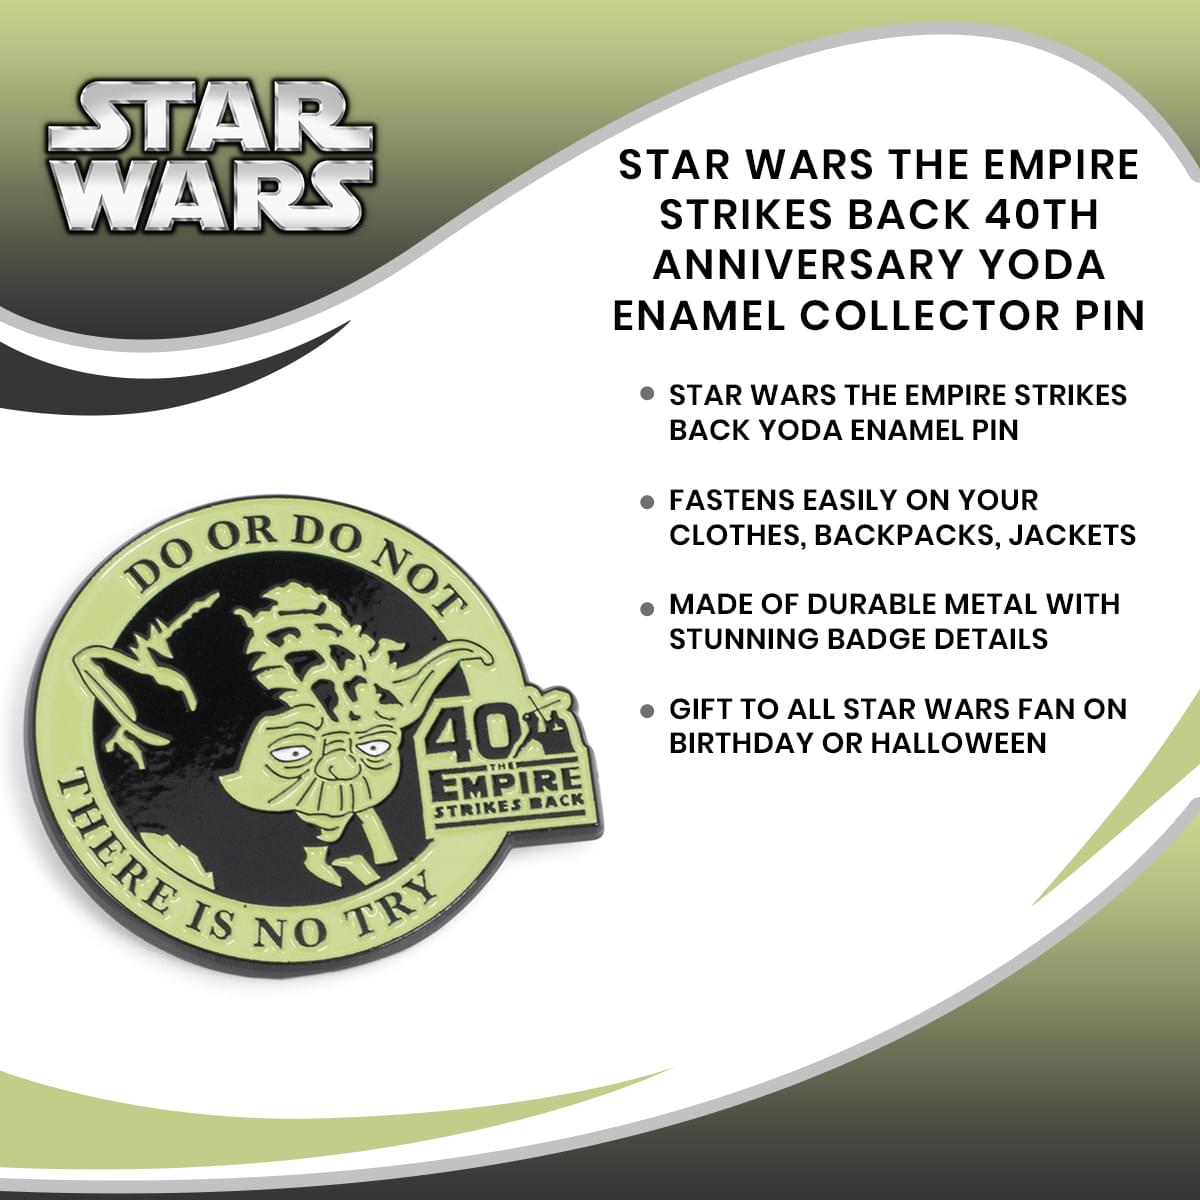 Star Wars The Empire Strikes Back 40th Anniversary Yoda Enamel Collector Pin